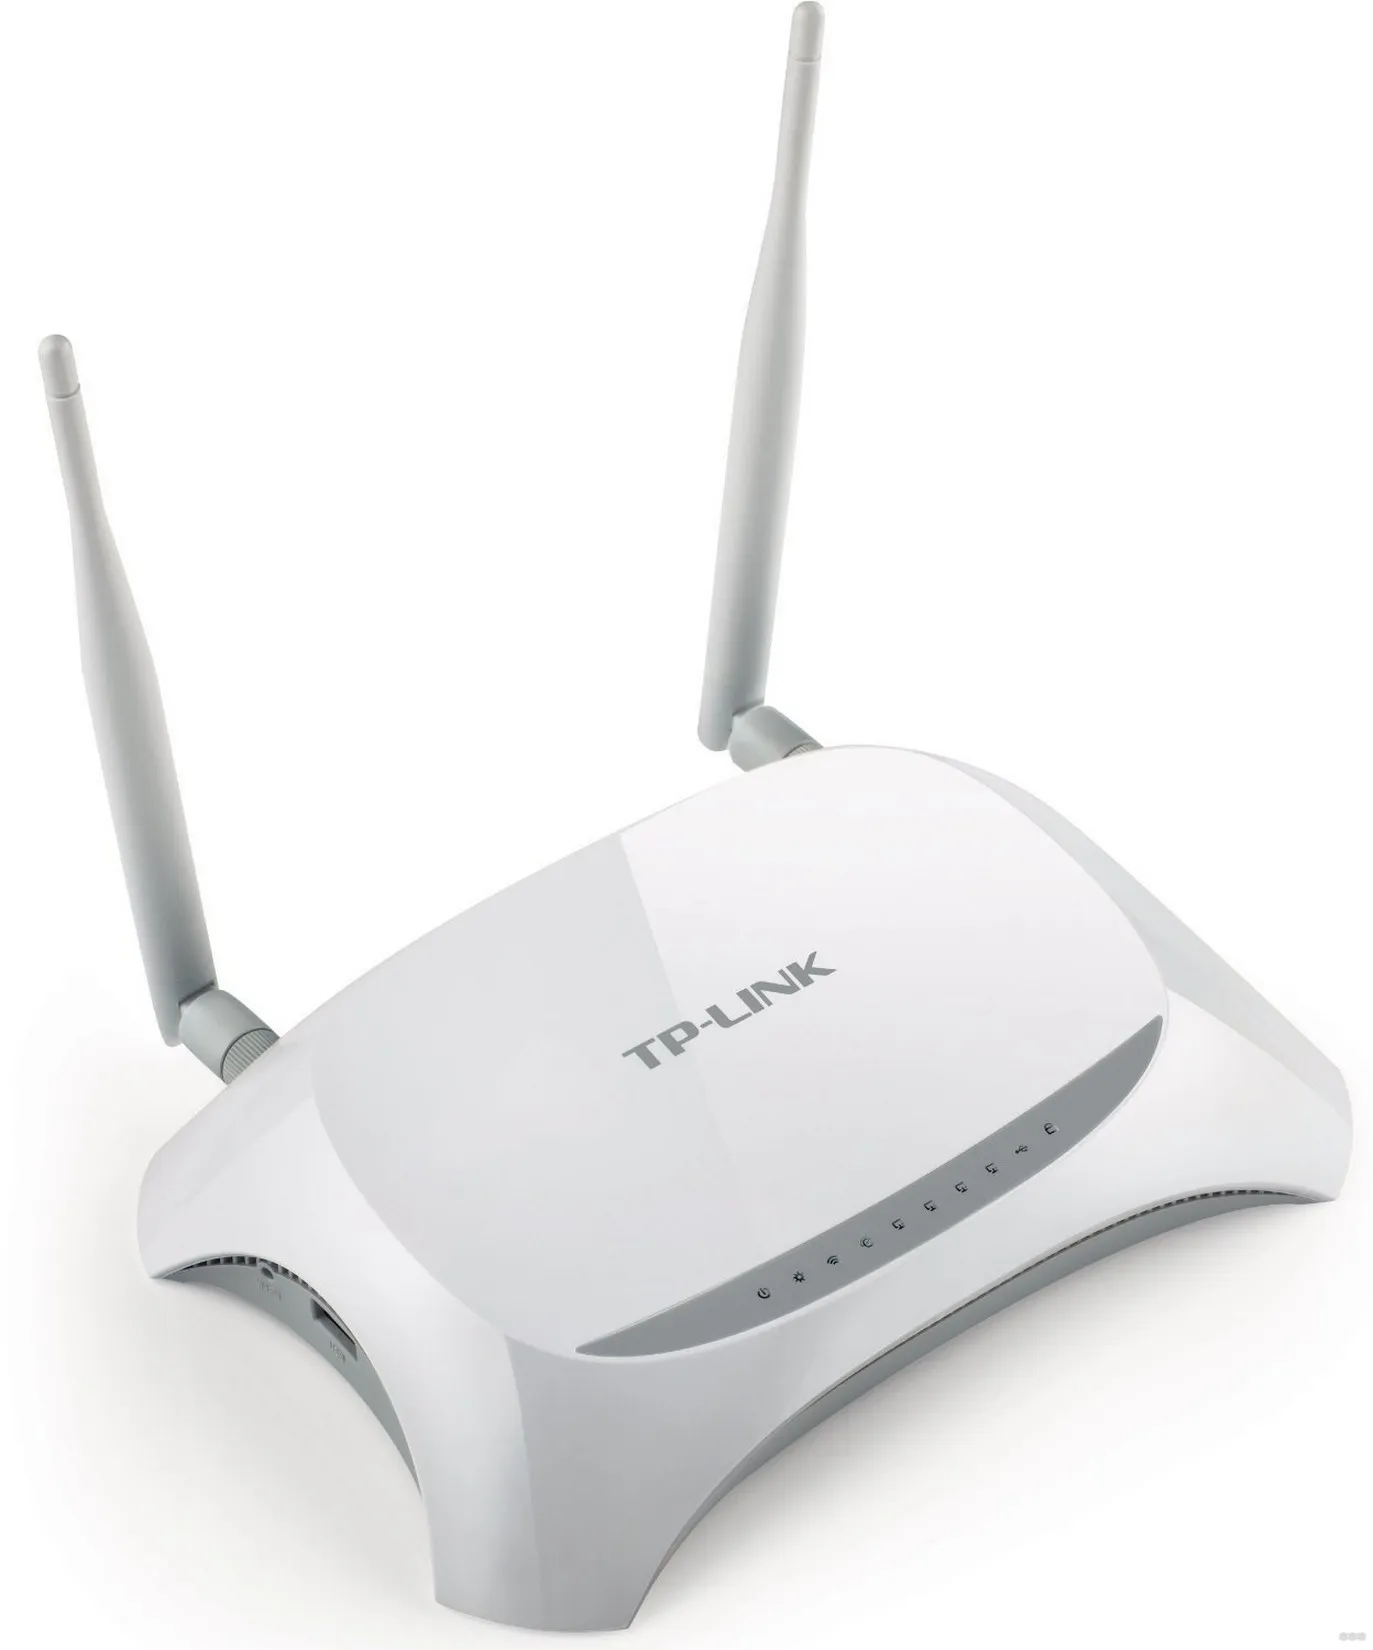 WiFi устройство TL-MR3420 300M Wireless N 3G Router, UMTS/HSPA/EVDO USB modem compatible,  3G/WAN failover, 2T2R, 2.4GHz, 802.11n/g/b, 2 detachable antennas#2